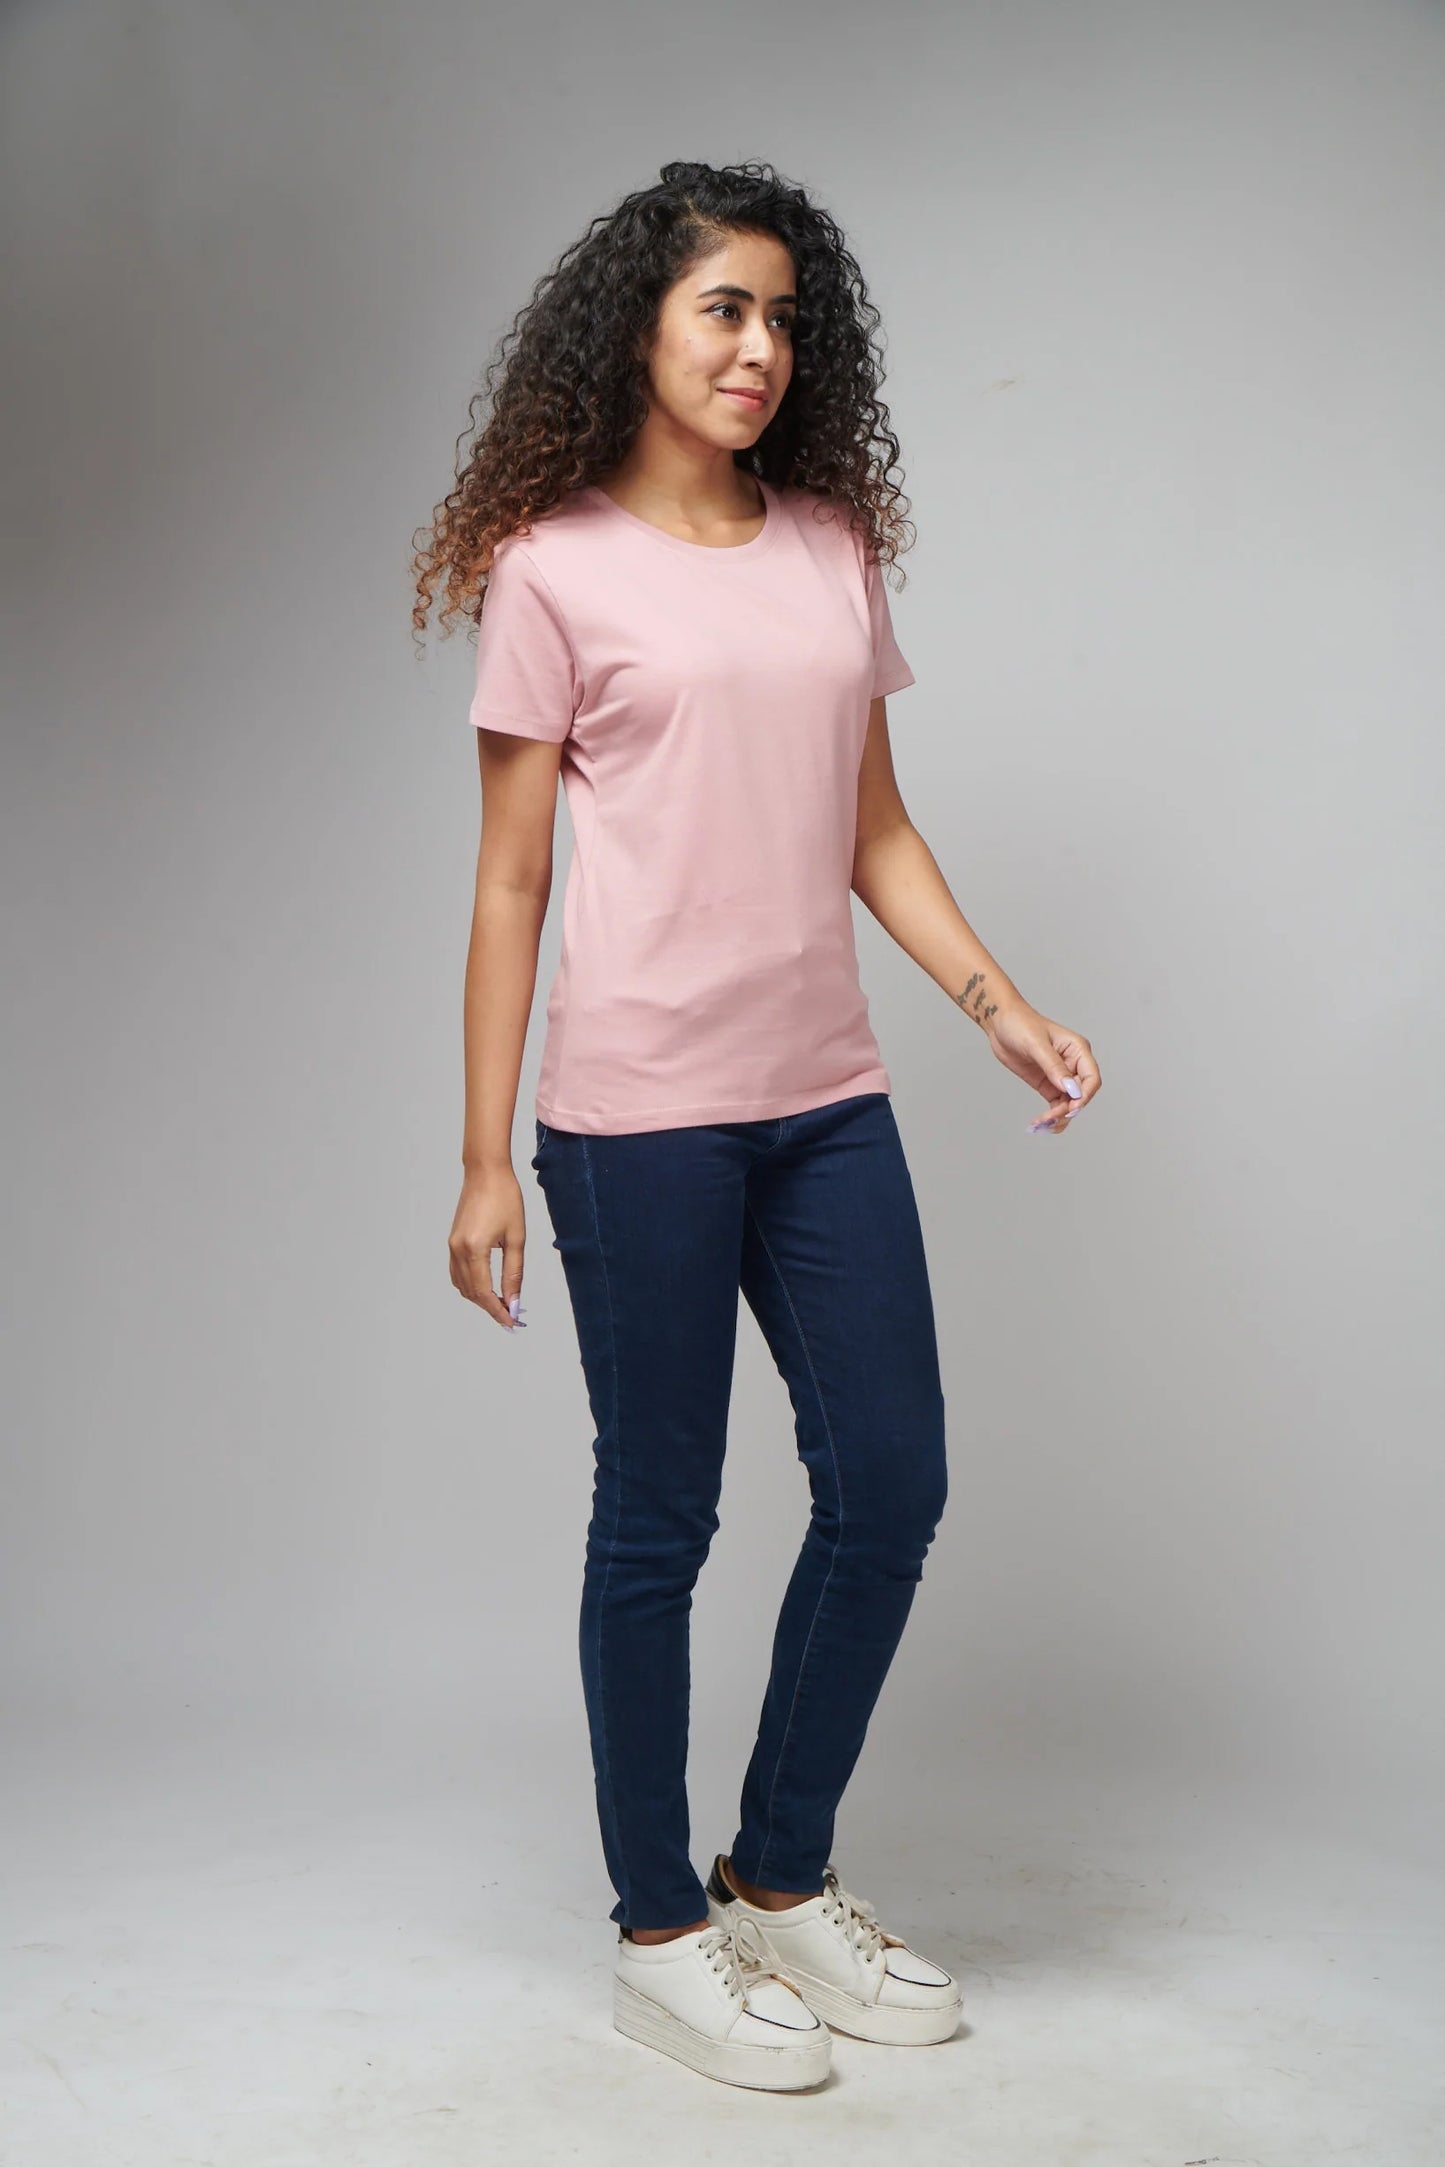 Women's Basic Pink Half Sleeves T-Shirt